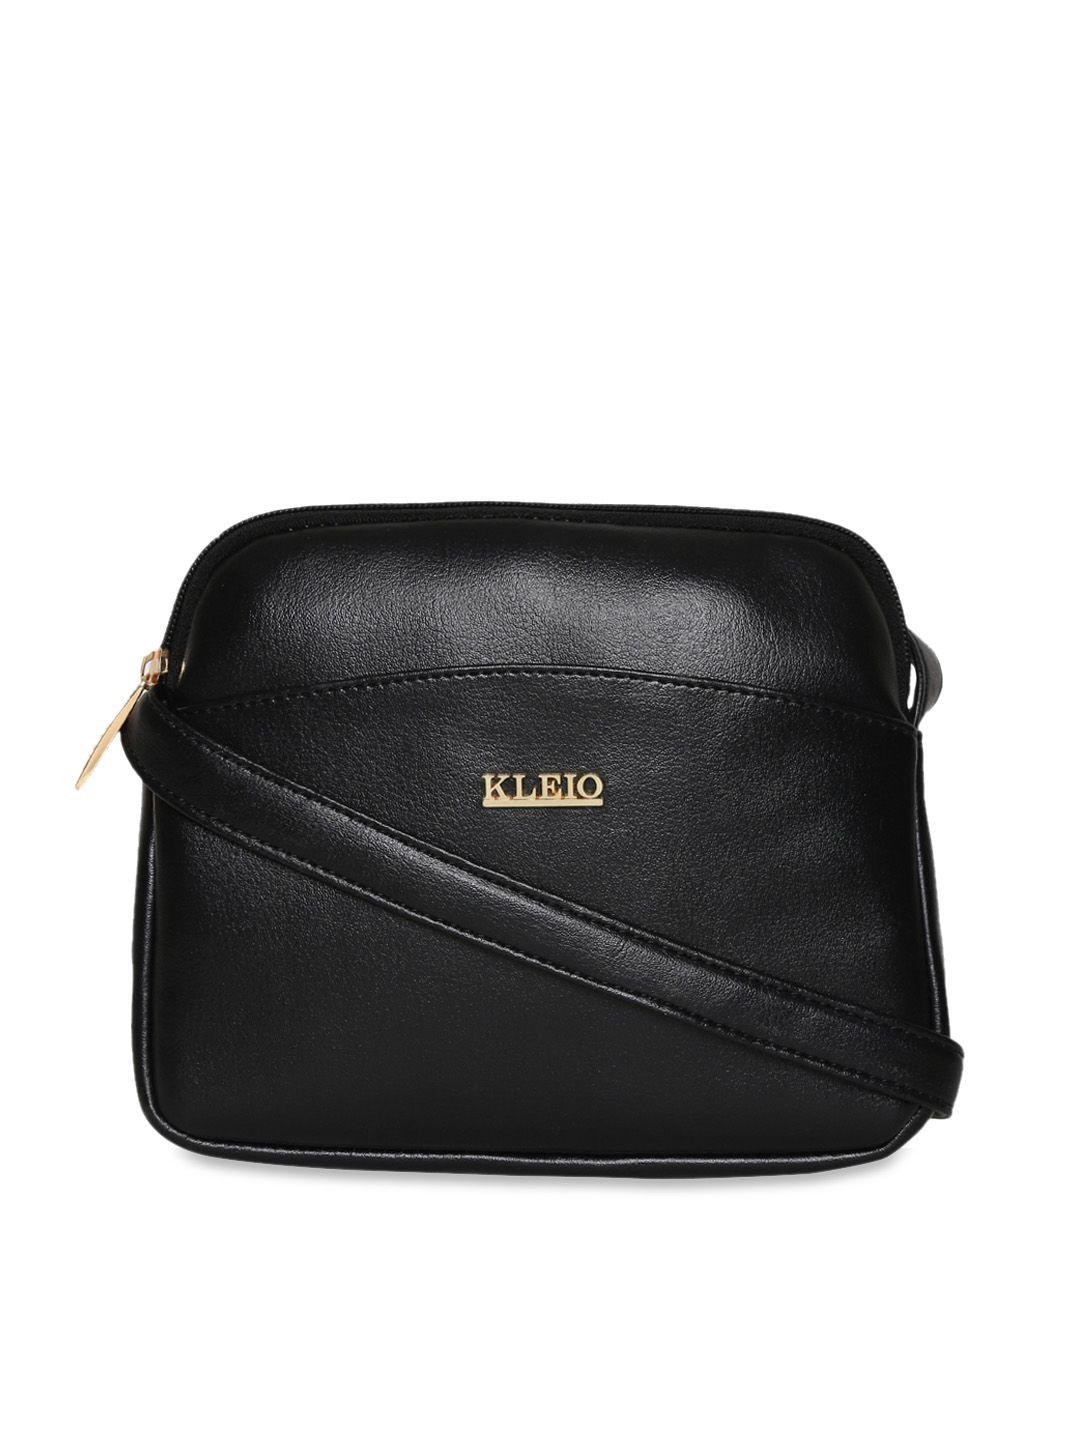 KLEIO Women Sling Bag